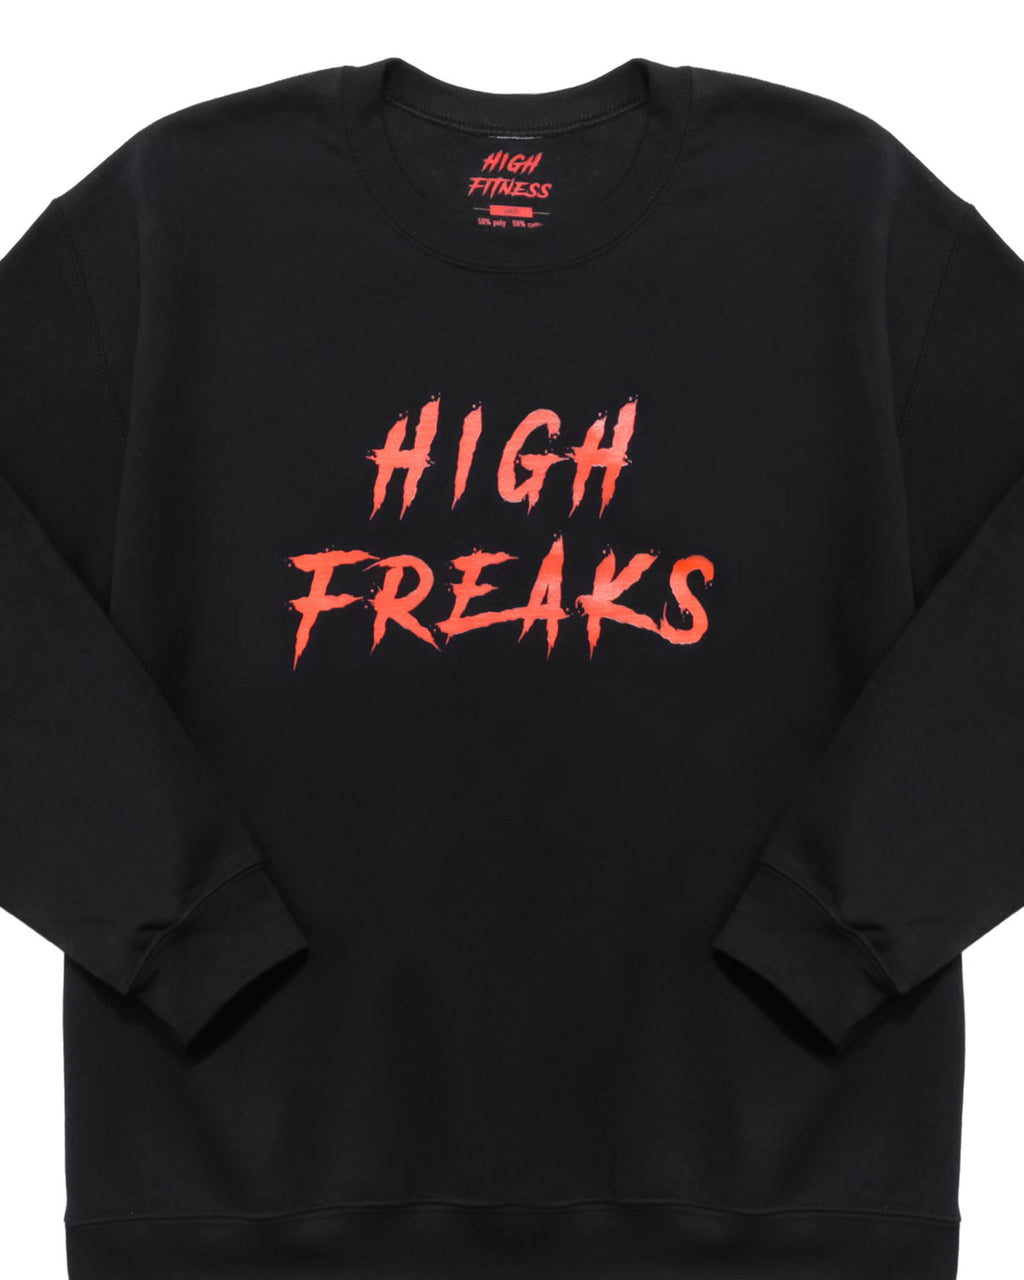 HIGH FREAKS - Sweatshirt *XL*